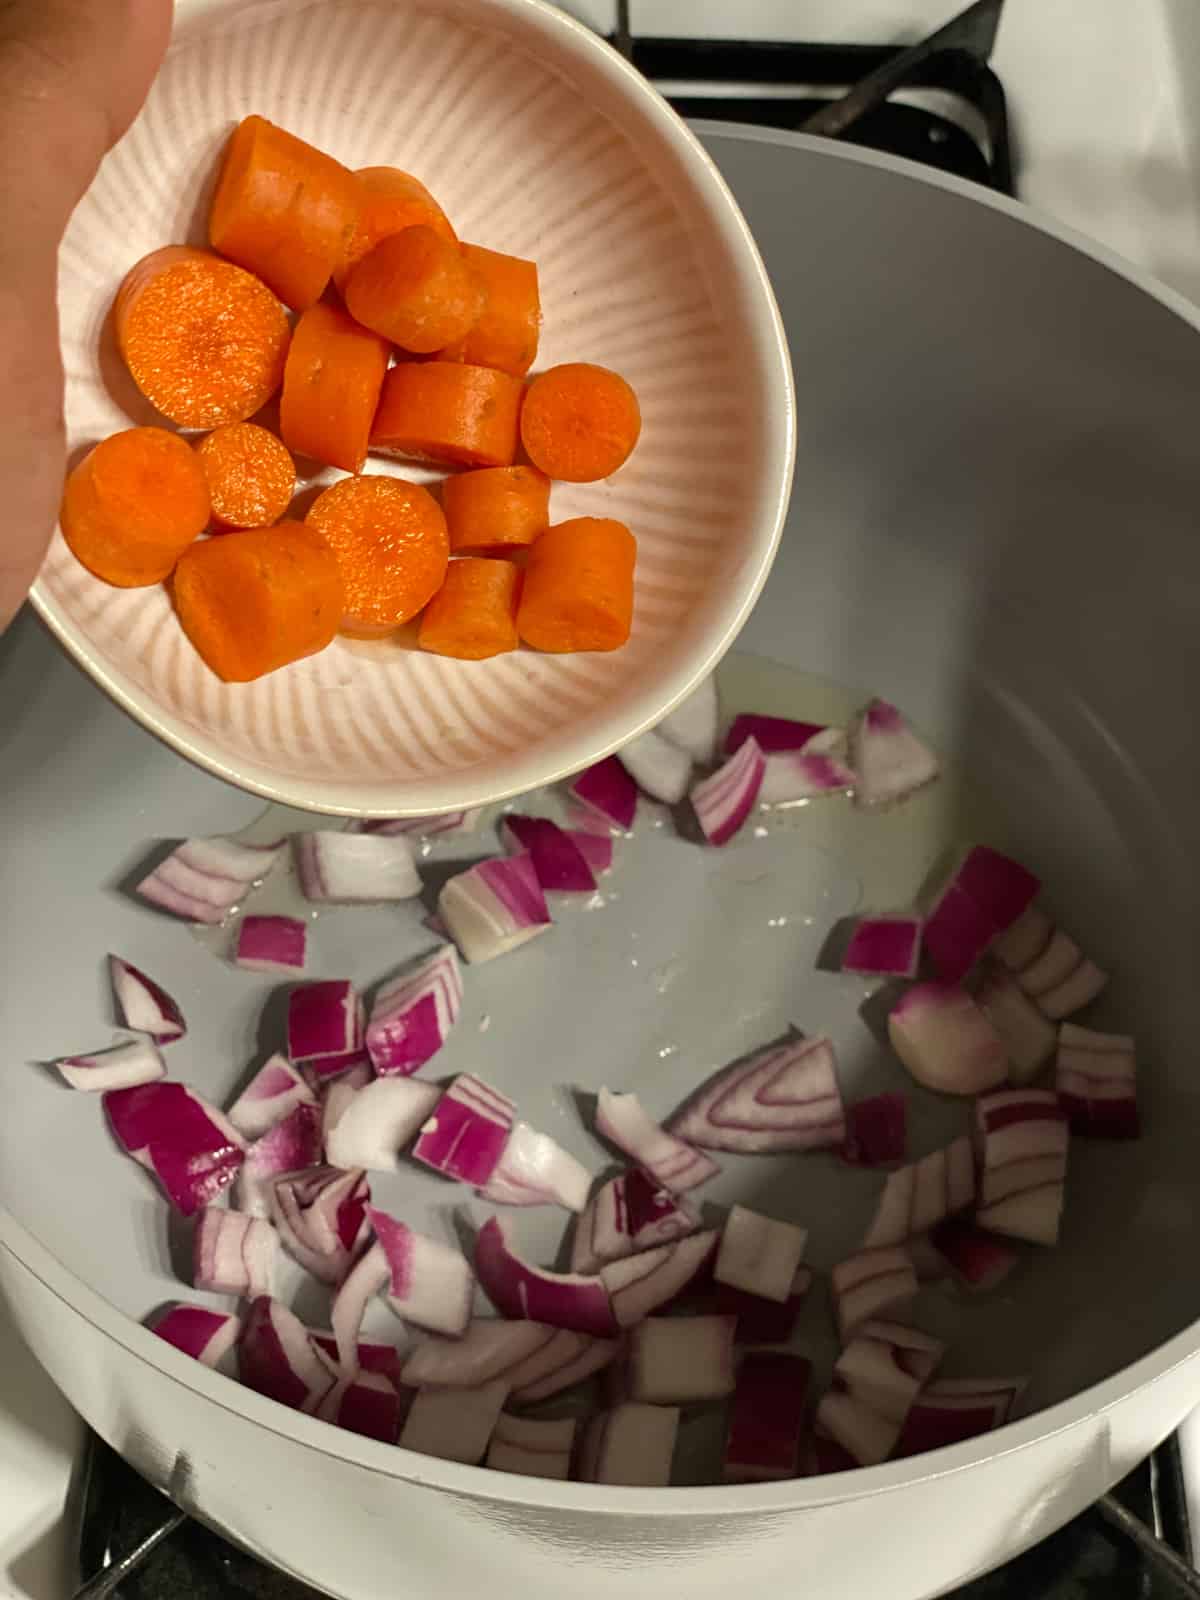 process shot of adding carrots to pan